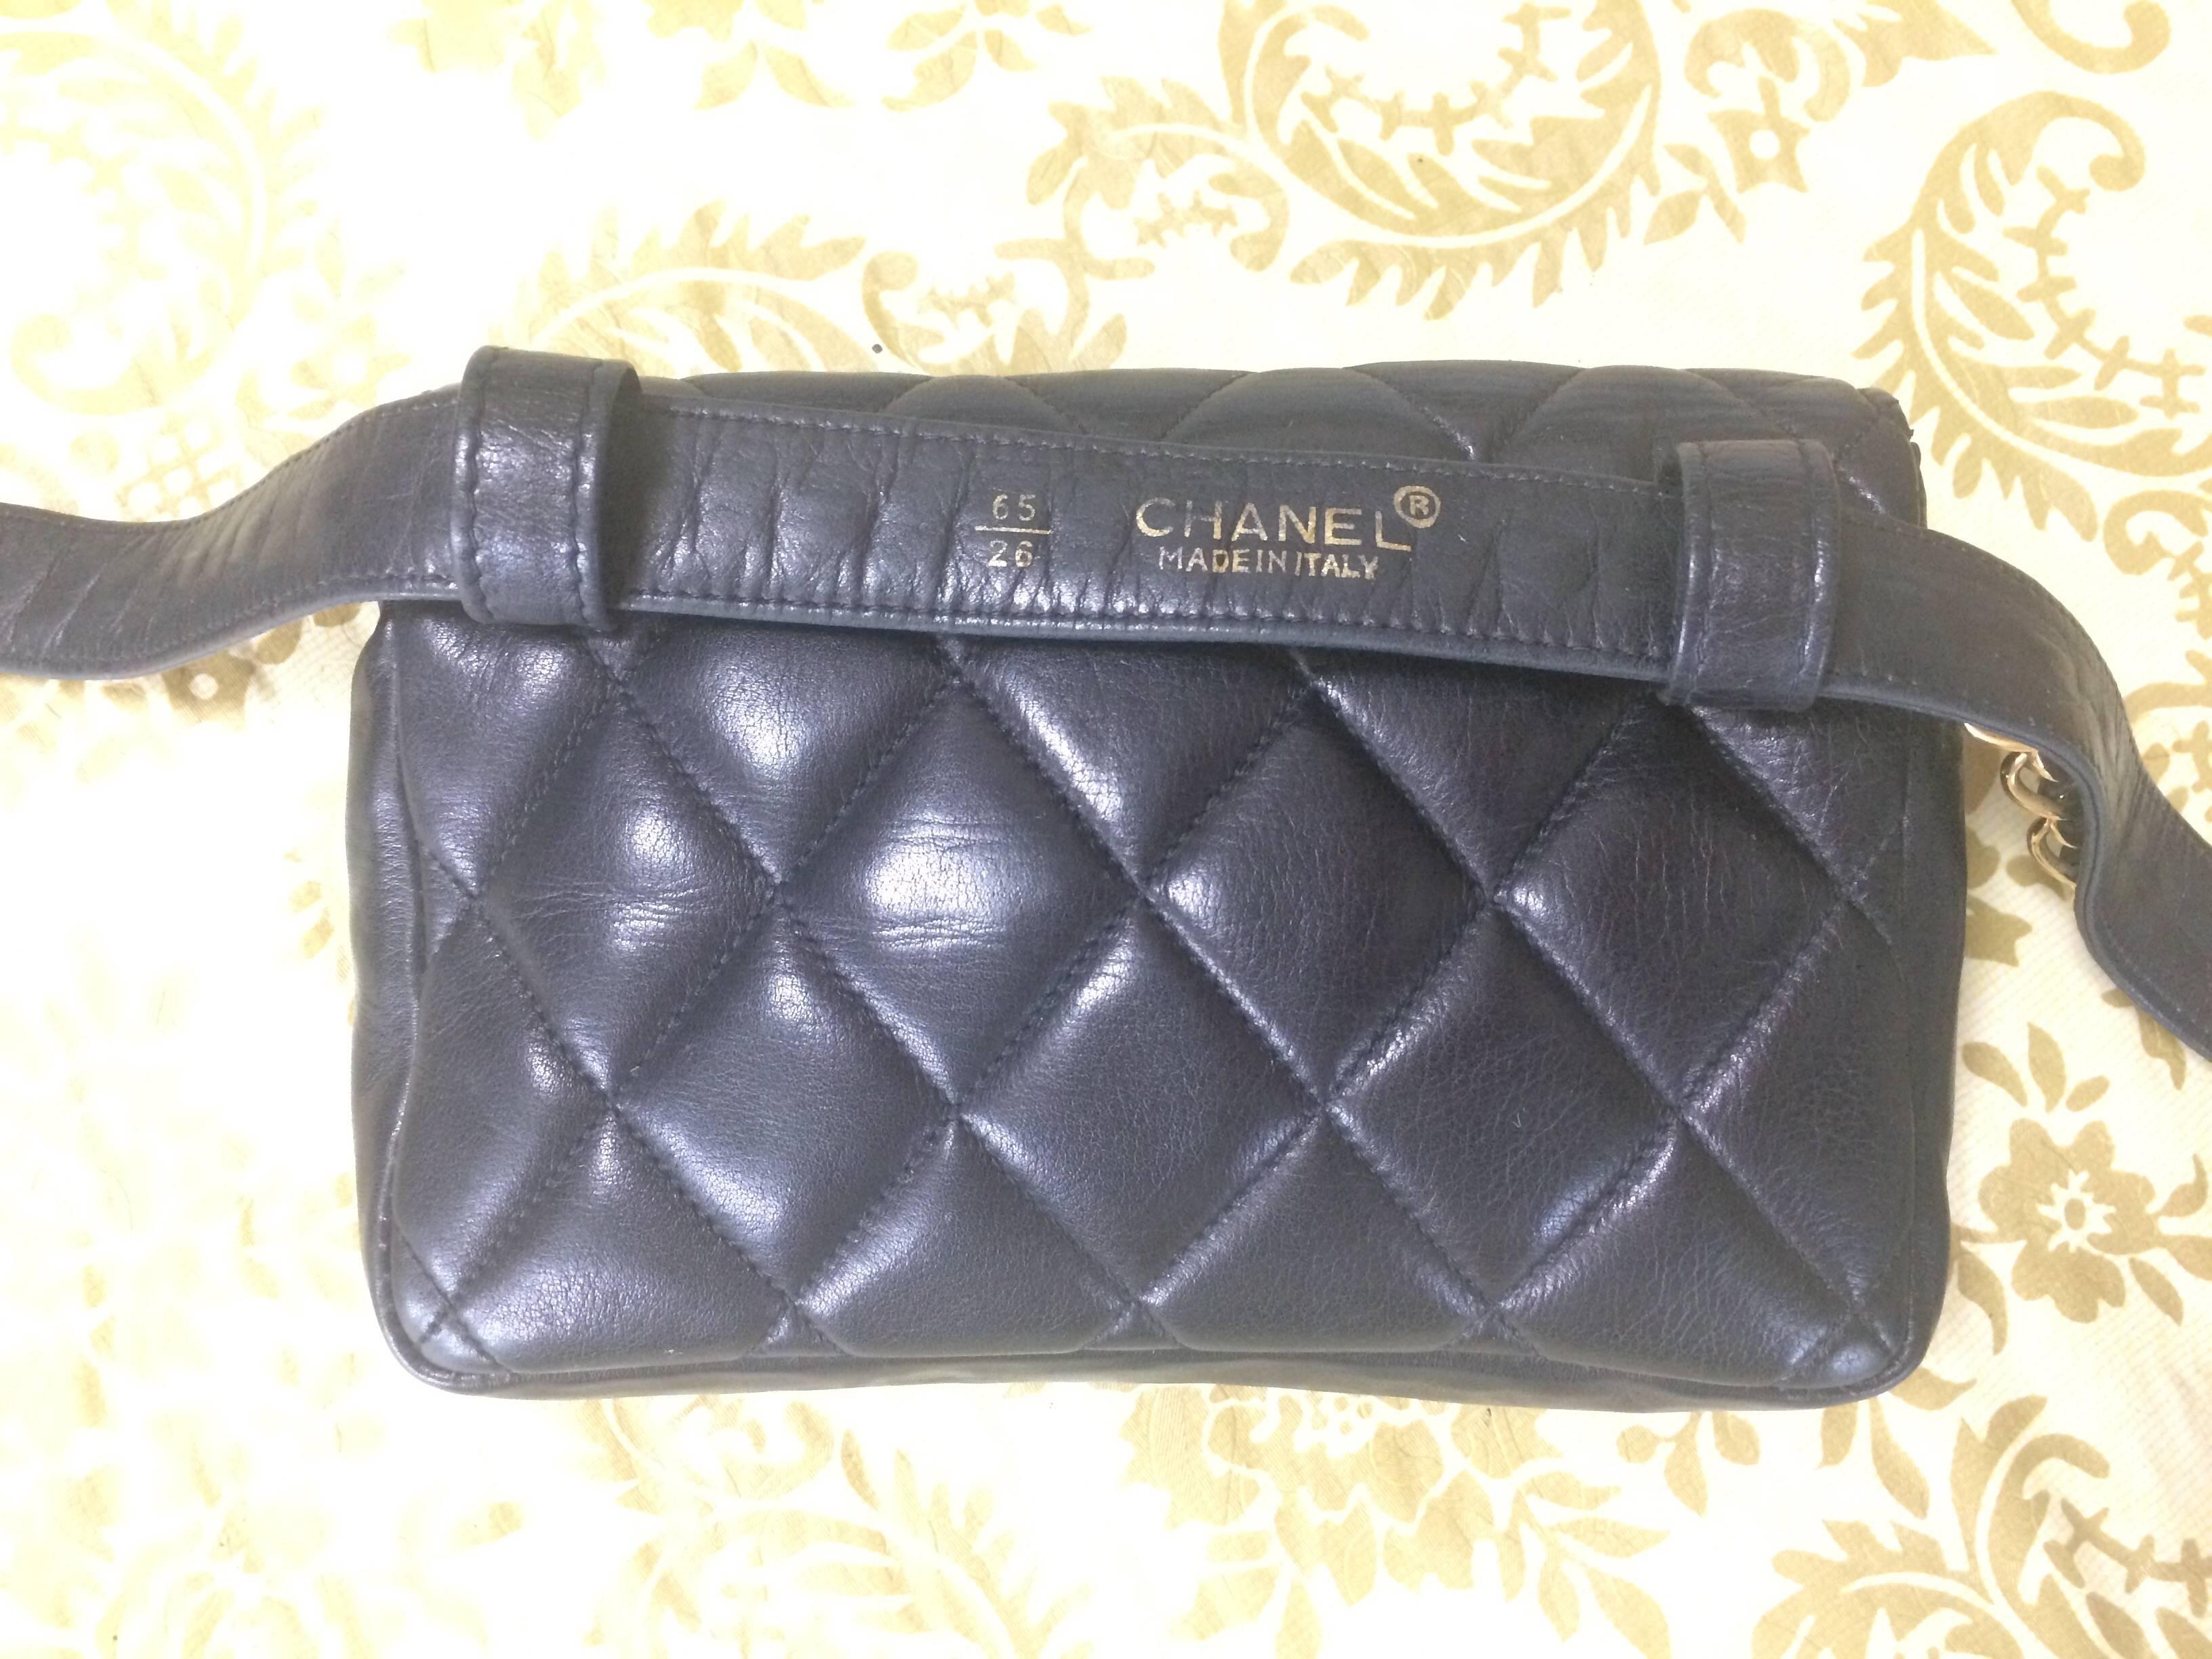 Vintage CHANEL black lamb waist bag, fanny pack with gold chain belt & CC motif. 1